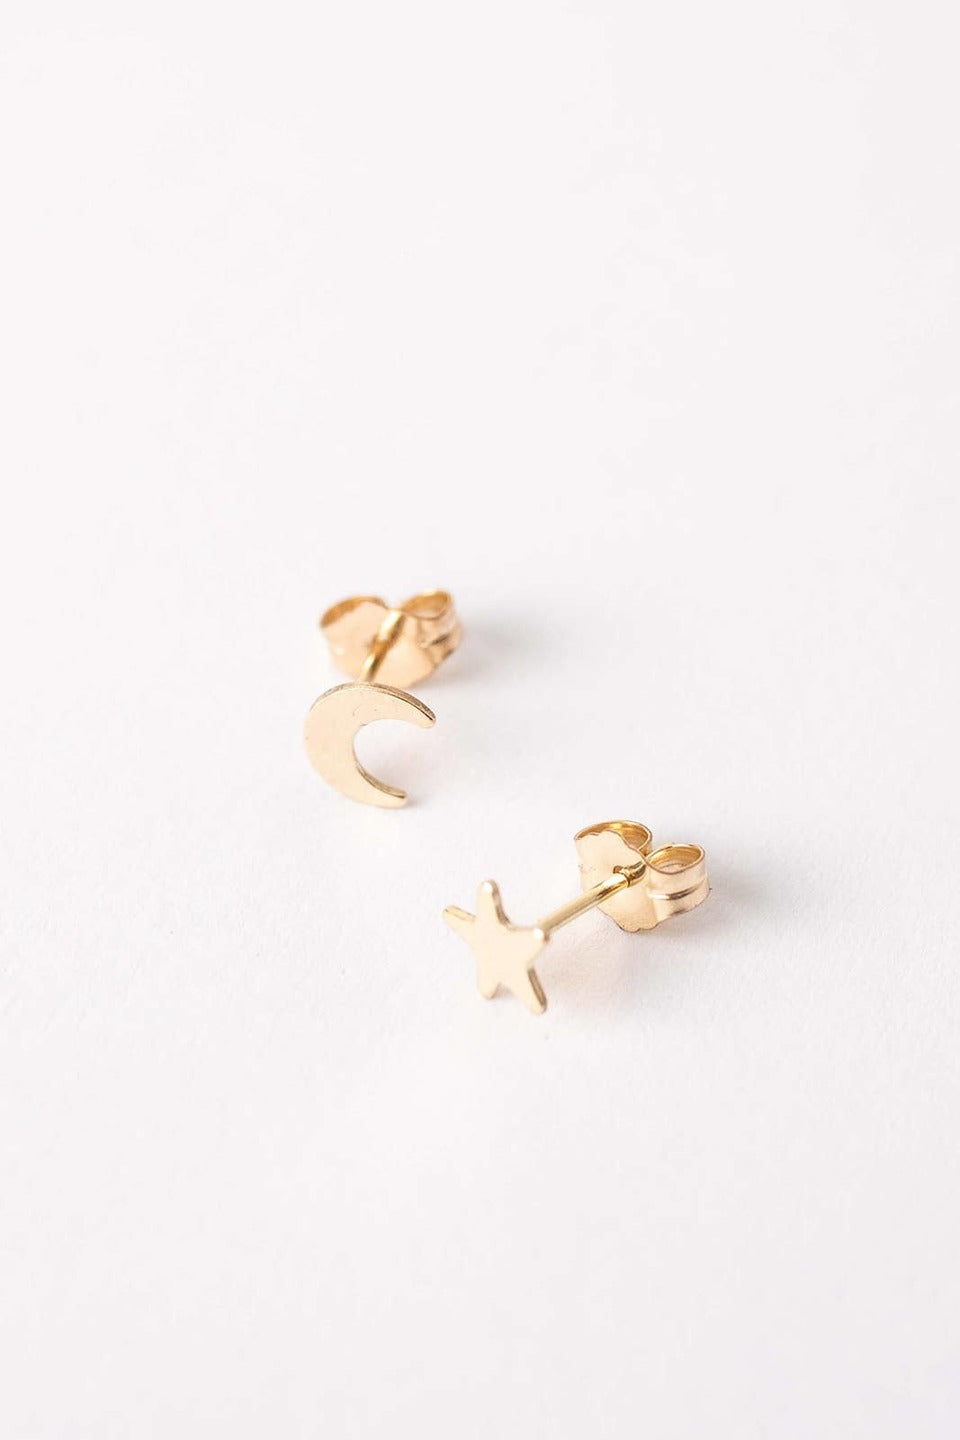 Night Sky Stud Earrings: Gold Filled